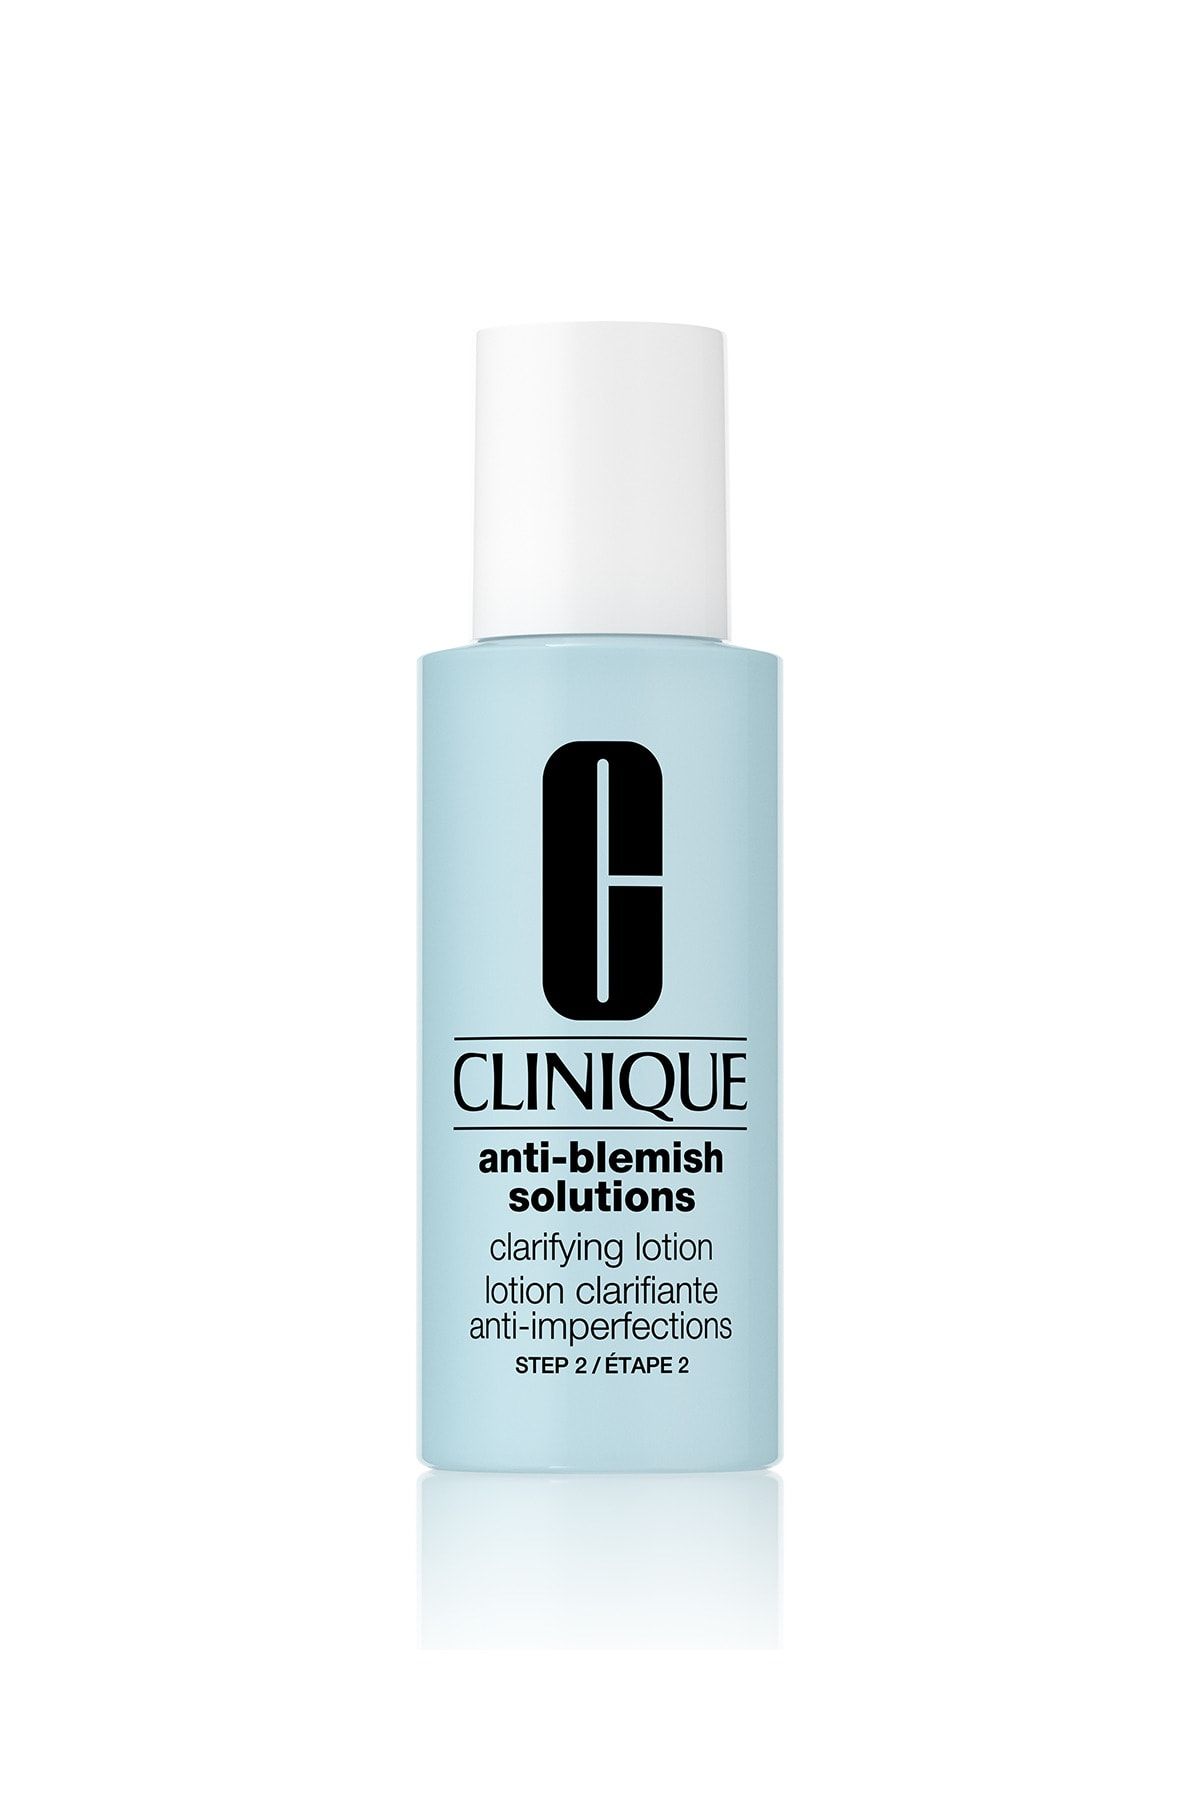 Clinique Anti-blemish Solutions™ Arındırıcı Tonik Losyon 60ml